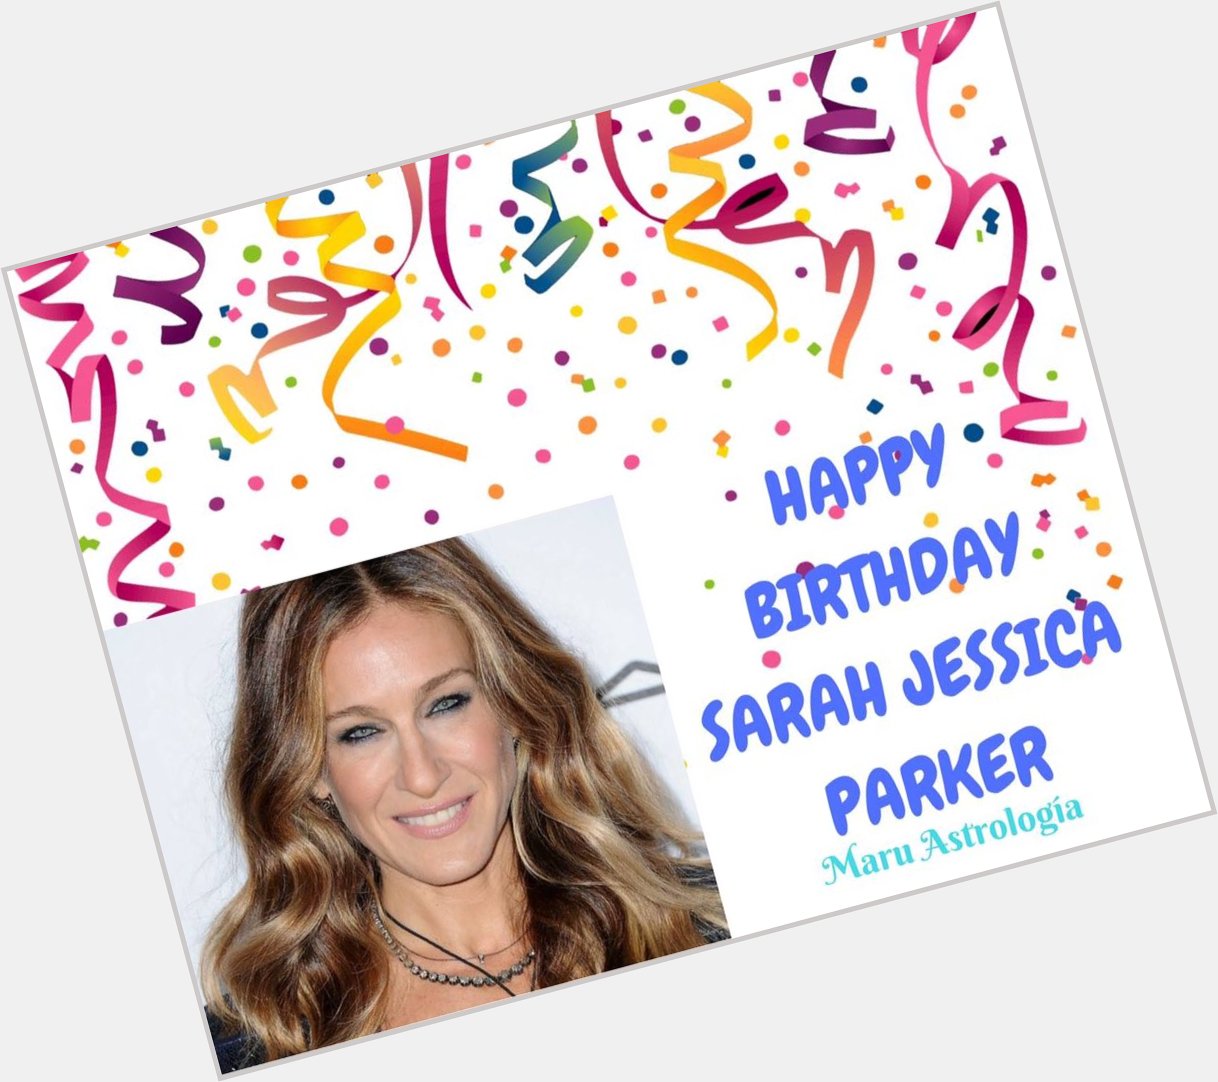 HAPPY BIRTHDAY SARAH JESSICA PARKER!!!!   